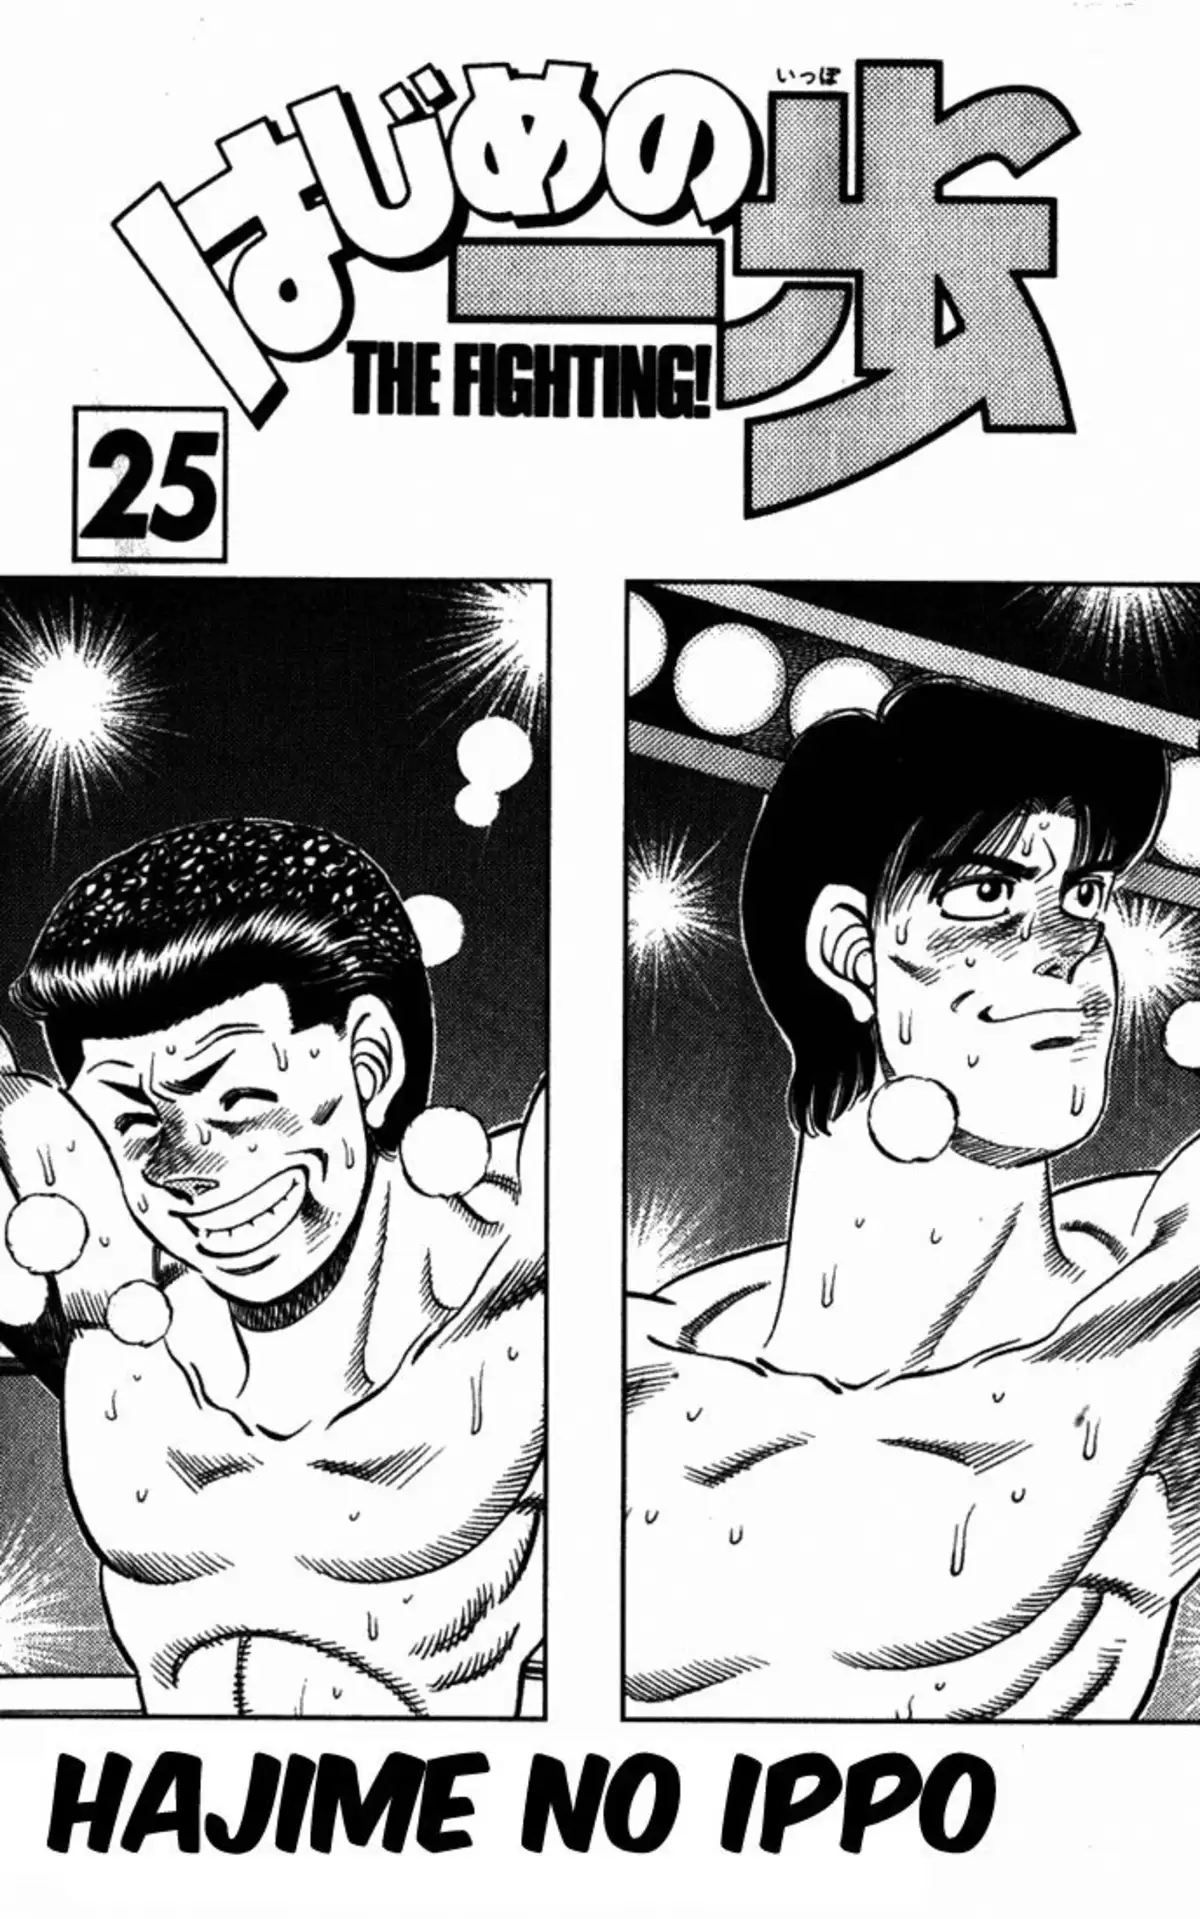 Hajime no Ippo Volume 25 page 2